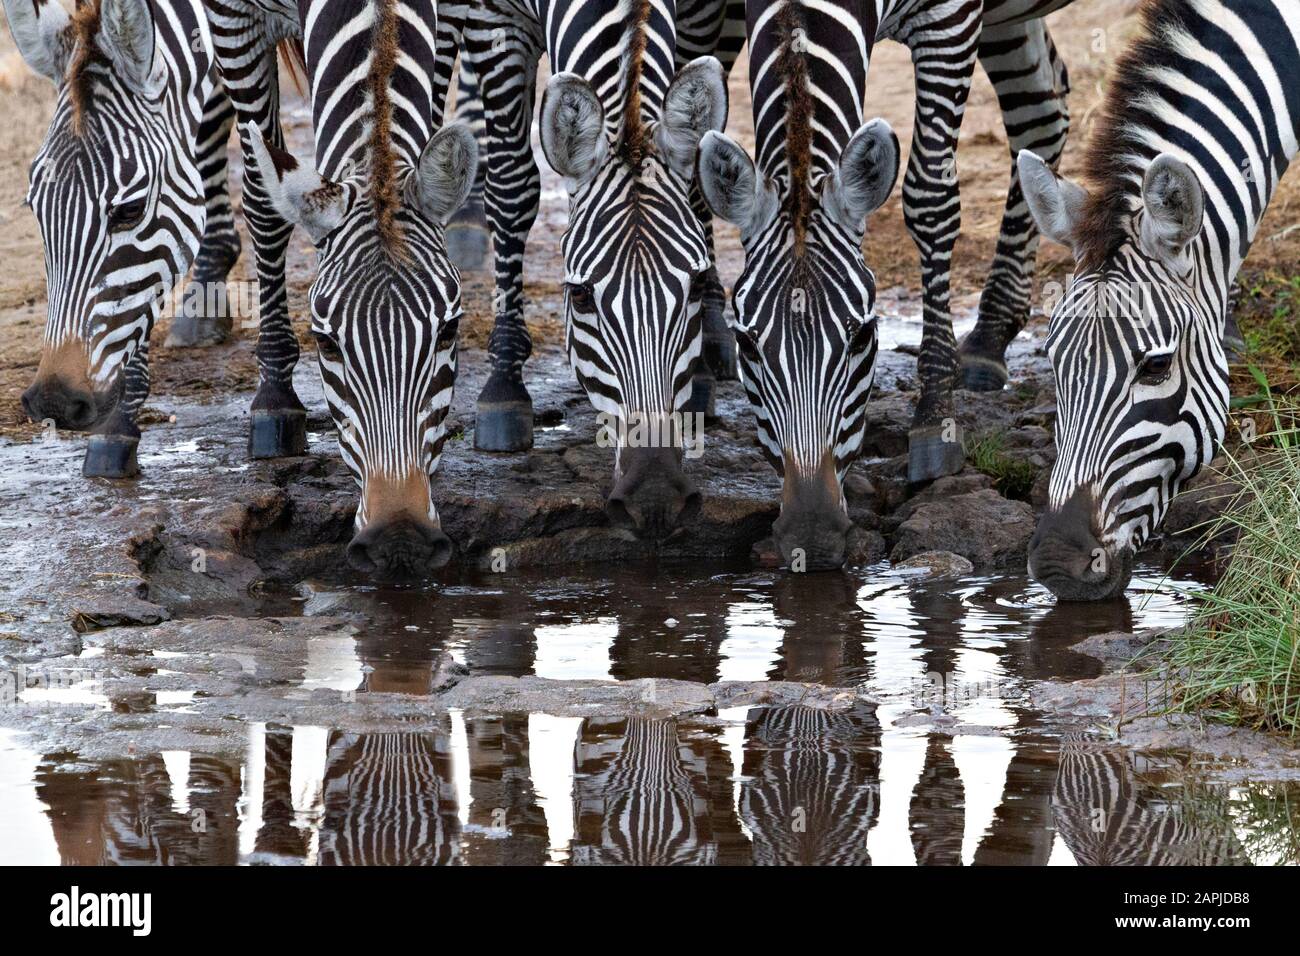 Agua potable de cebras en Serengeti, Tanzania Foto de stock